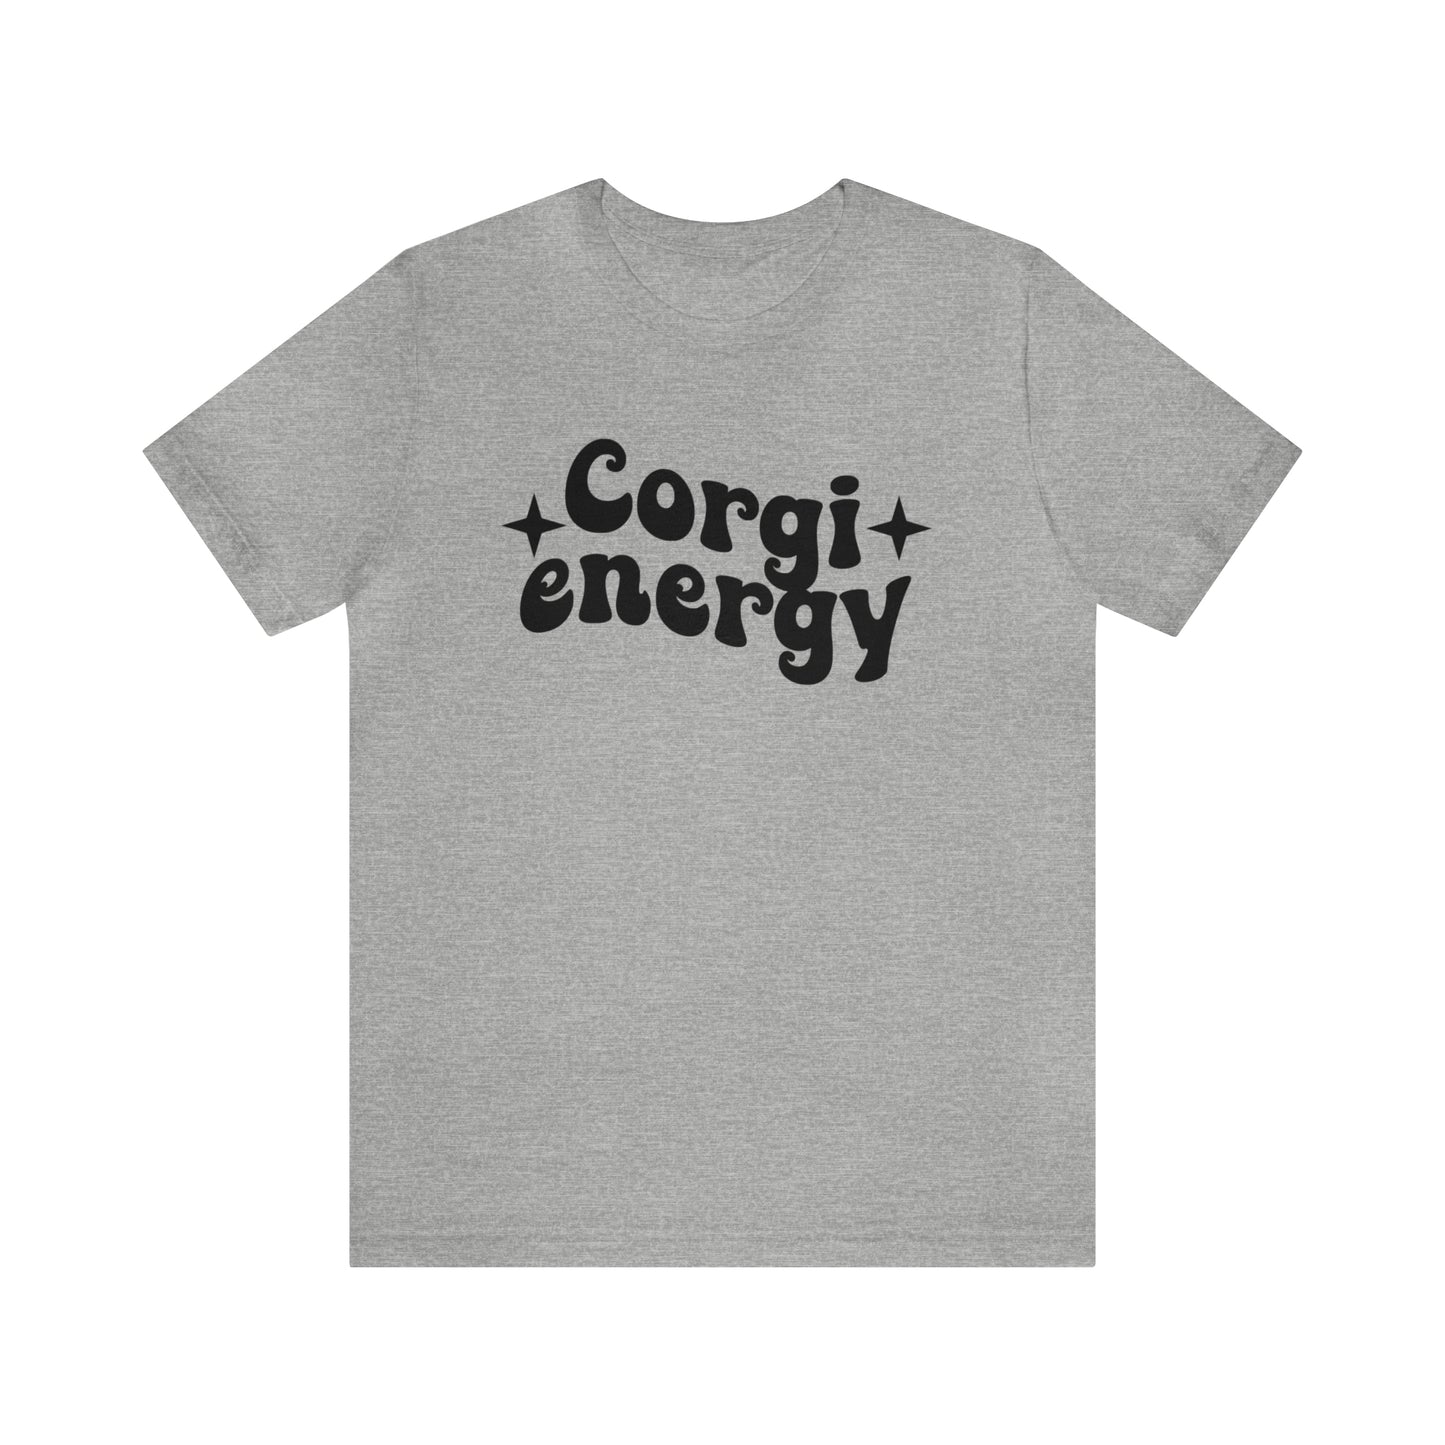 Corgi Energy Dog Short Sleeve T-shirt